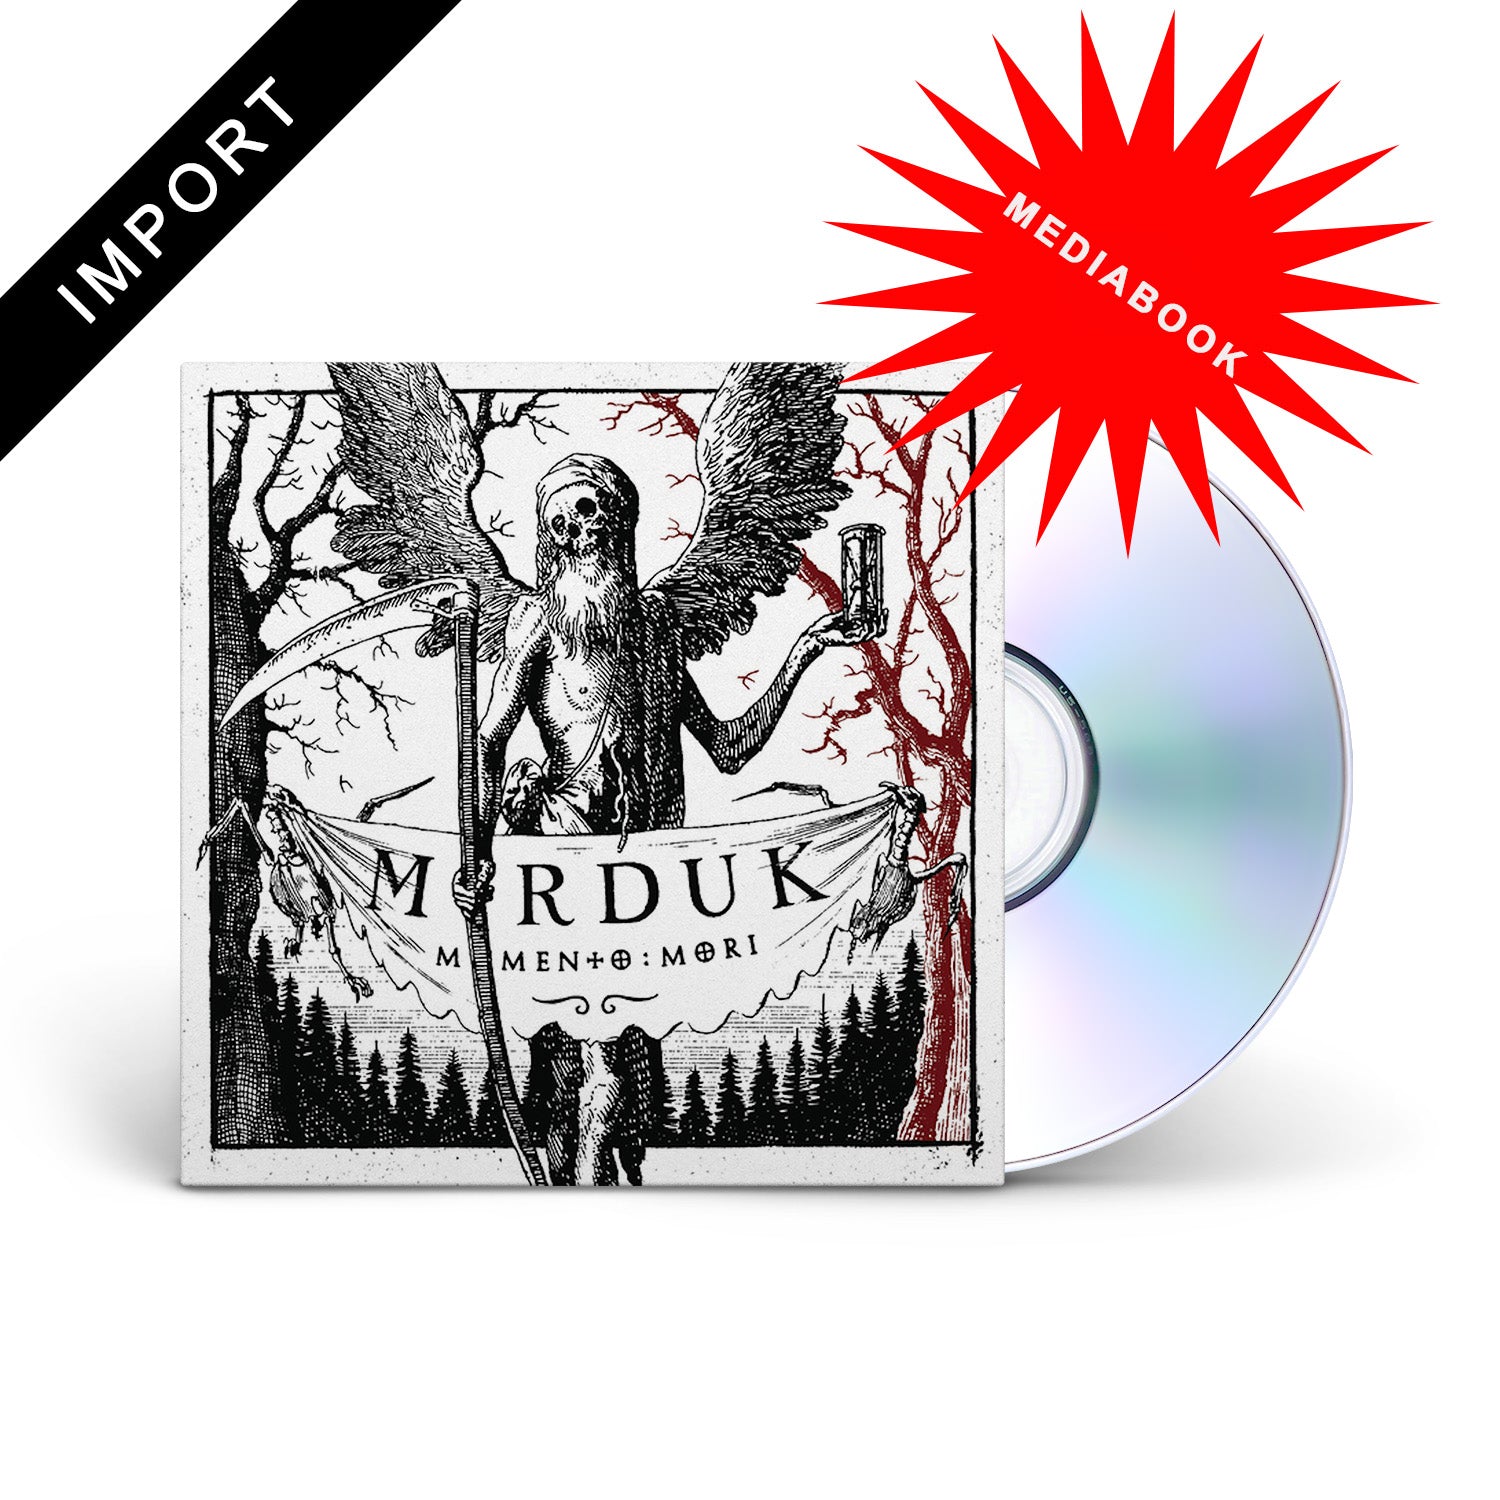 MARDUK - Memento Mori - CD Mediabook